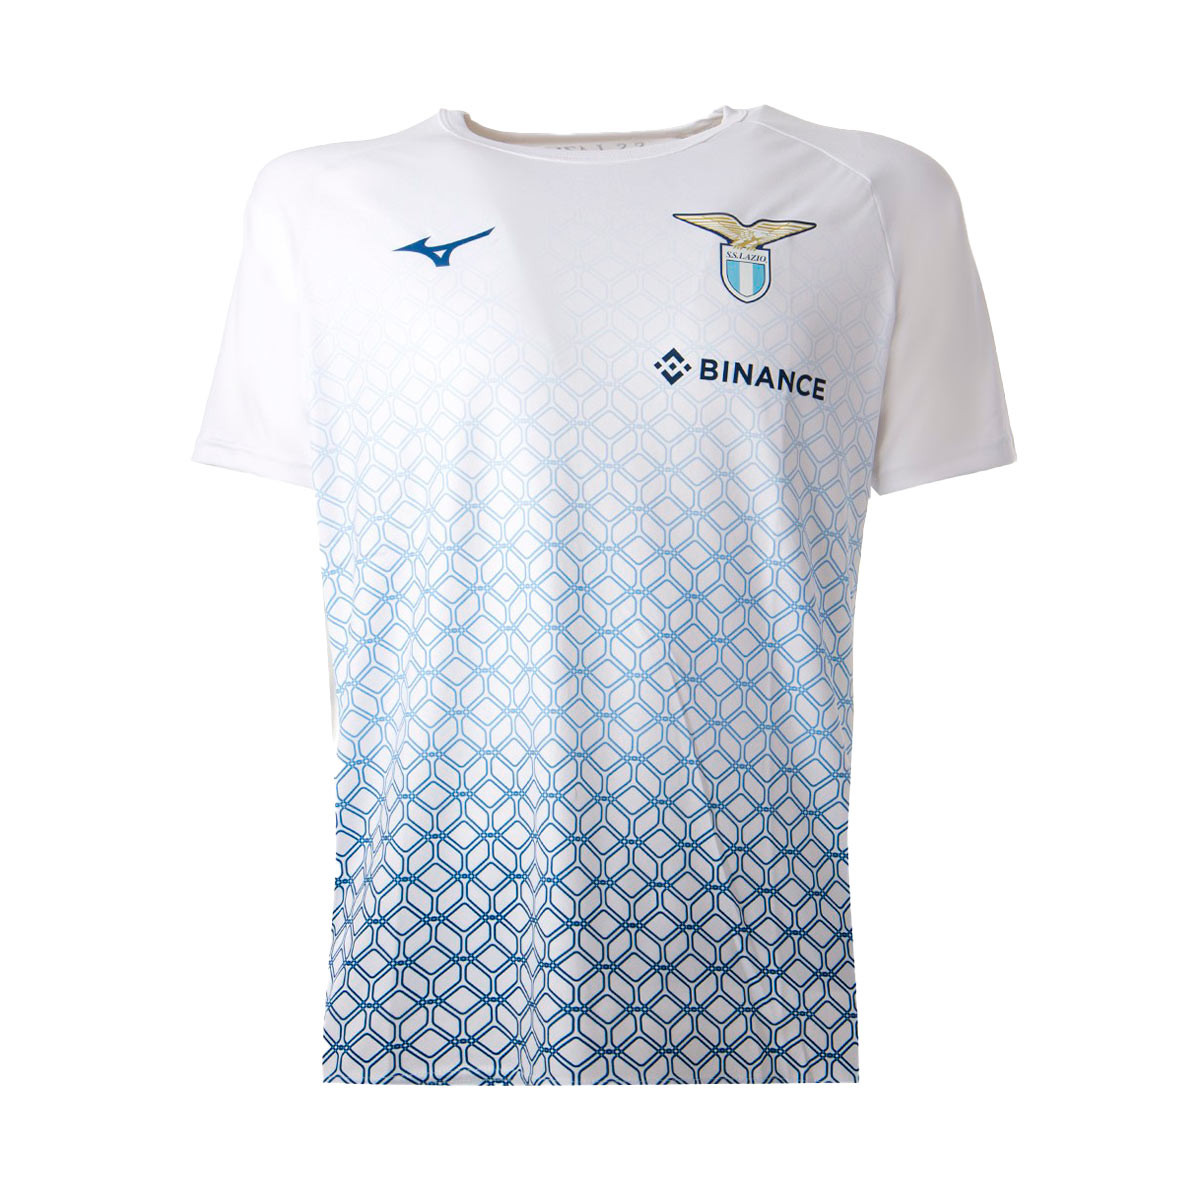 S.S. Lazio Store, Match Kits